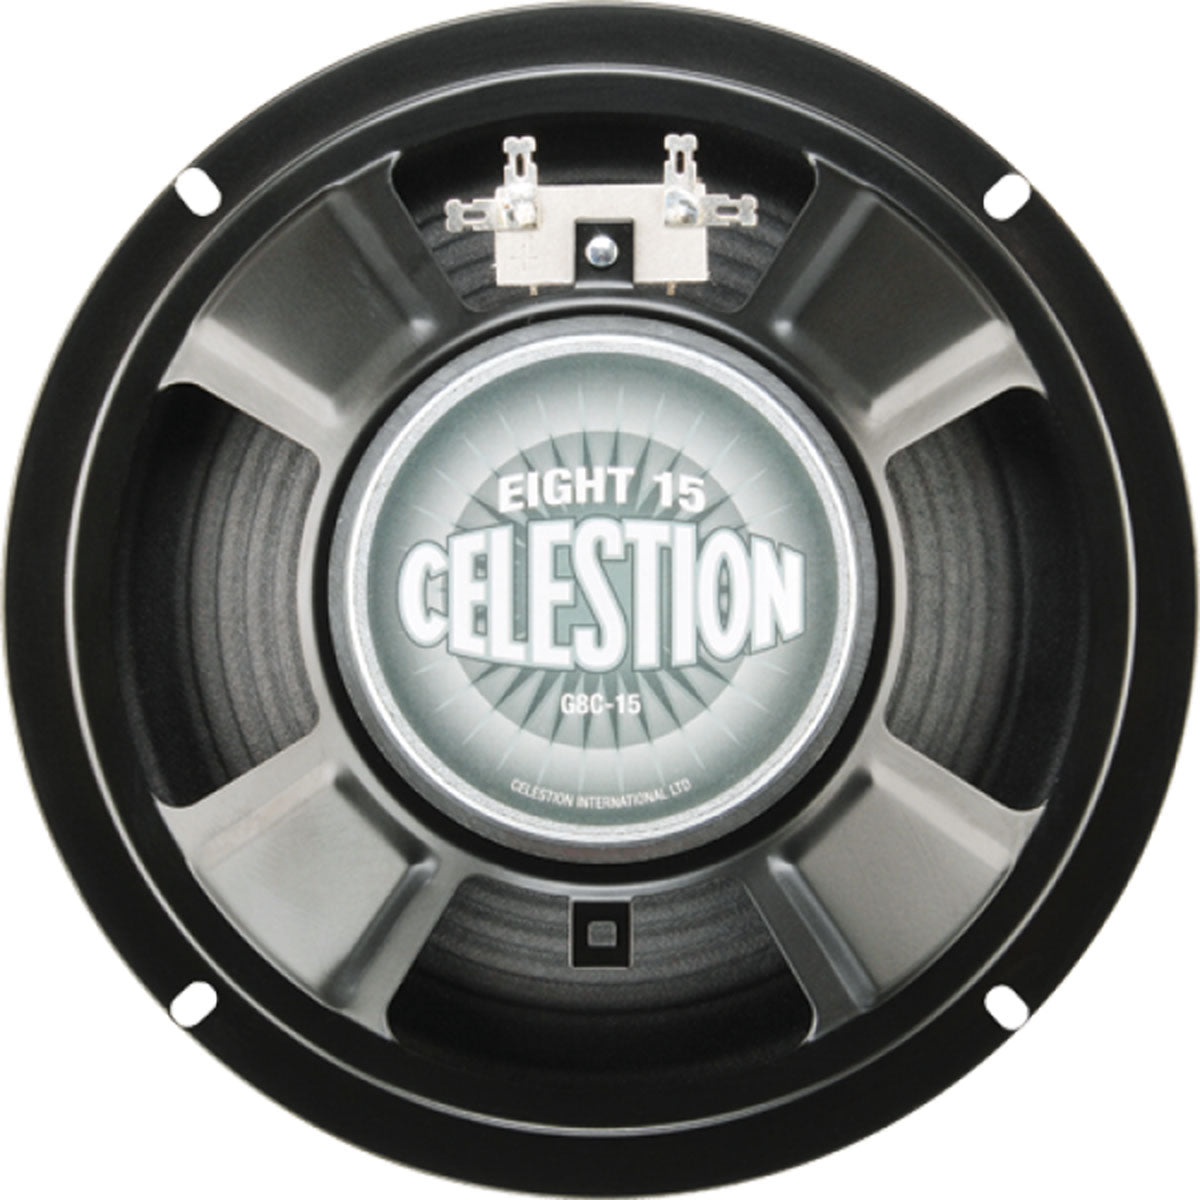 Celestion T5852 Originals Series Eight 15 Guitar Speaker 8 Inch 15W 16OHM